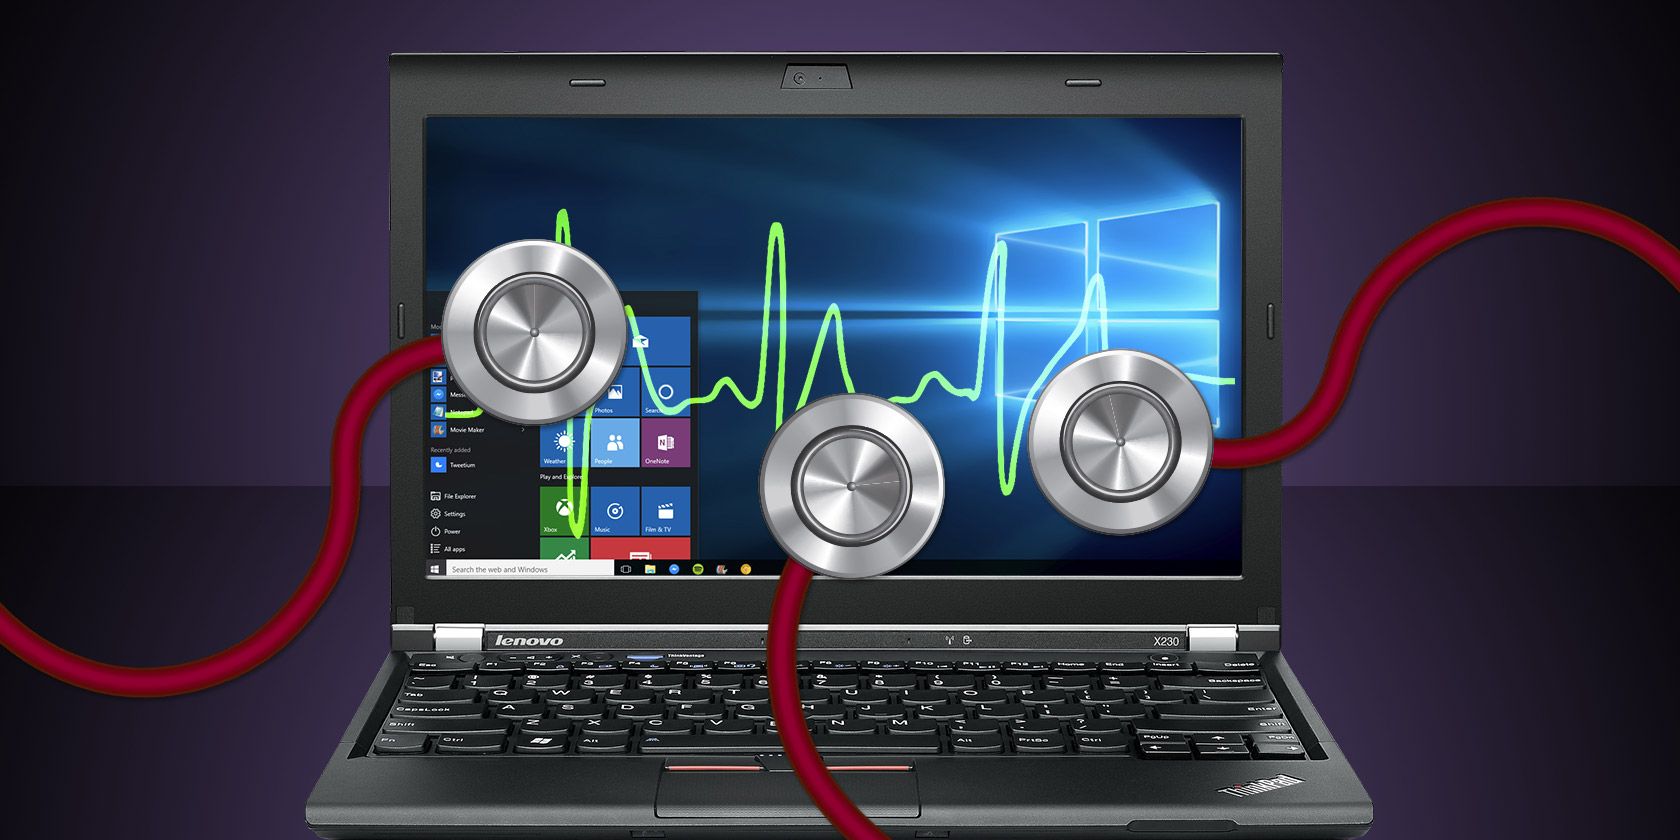 15 Diagnostics Tools to Your PC's Health